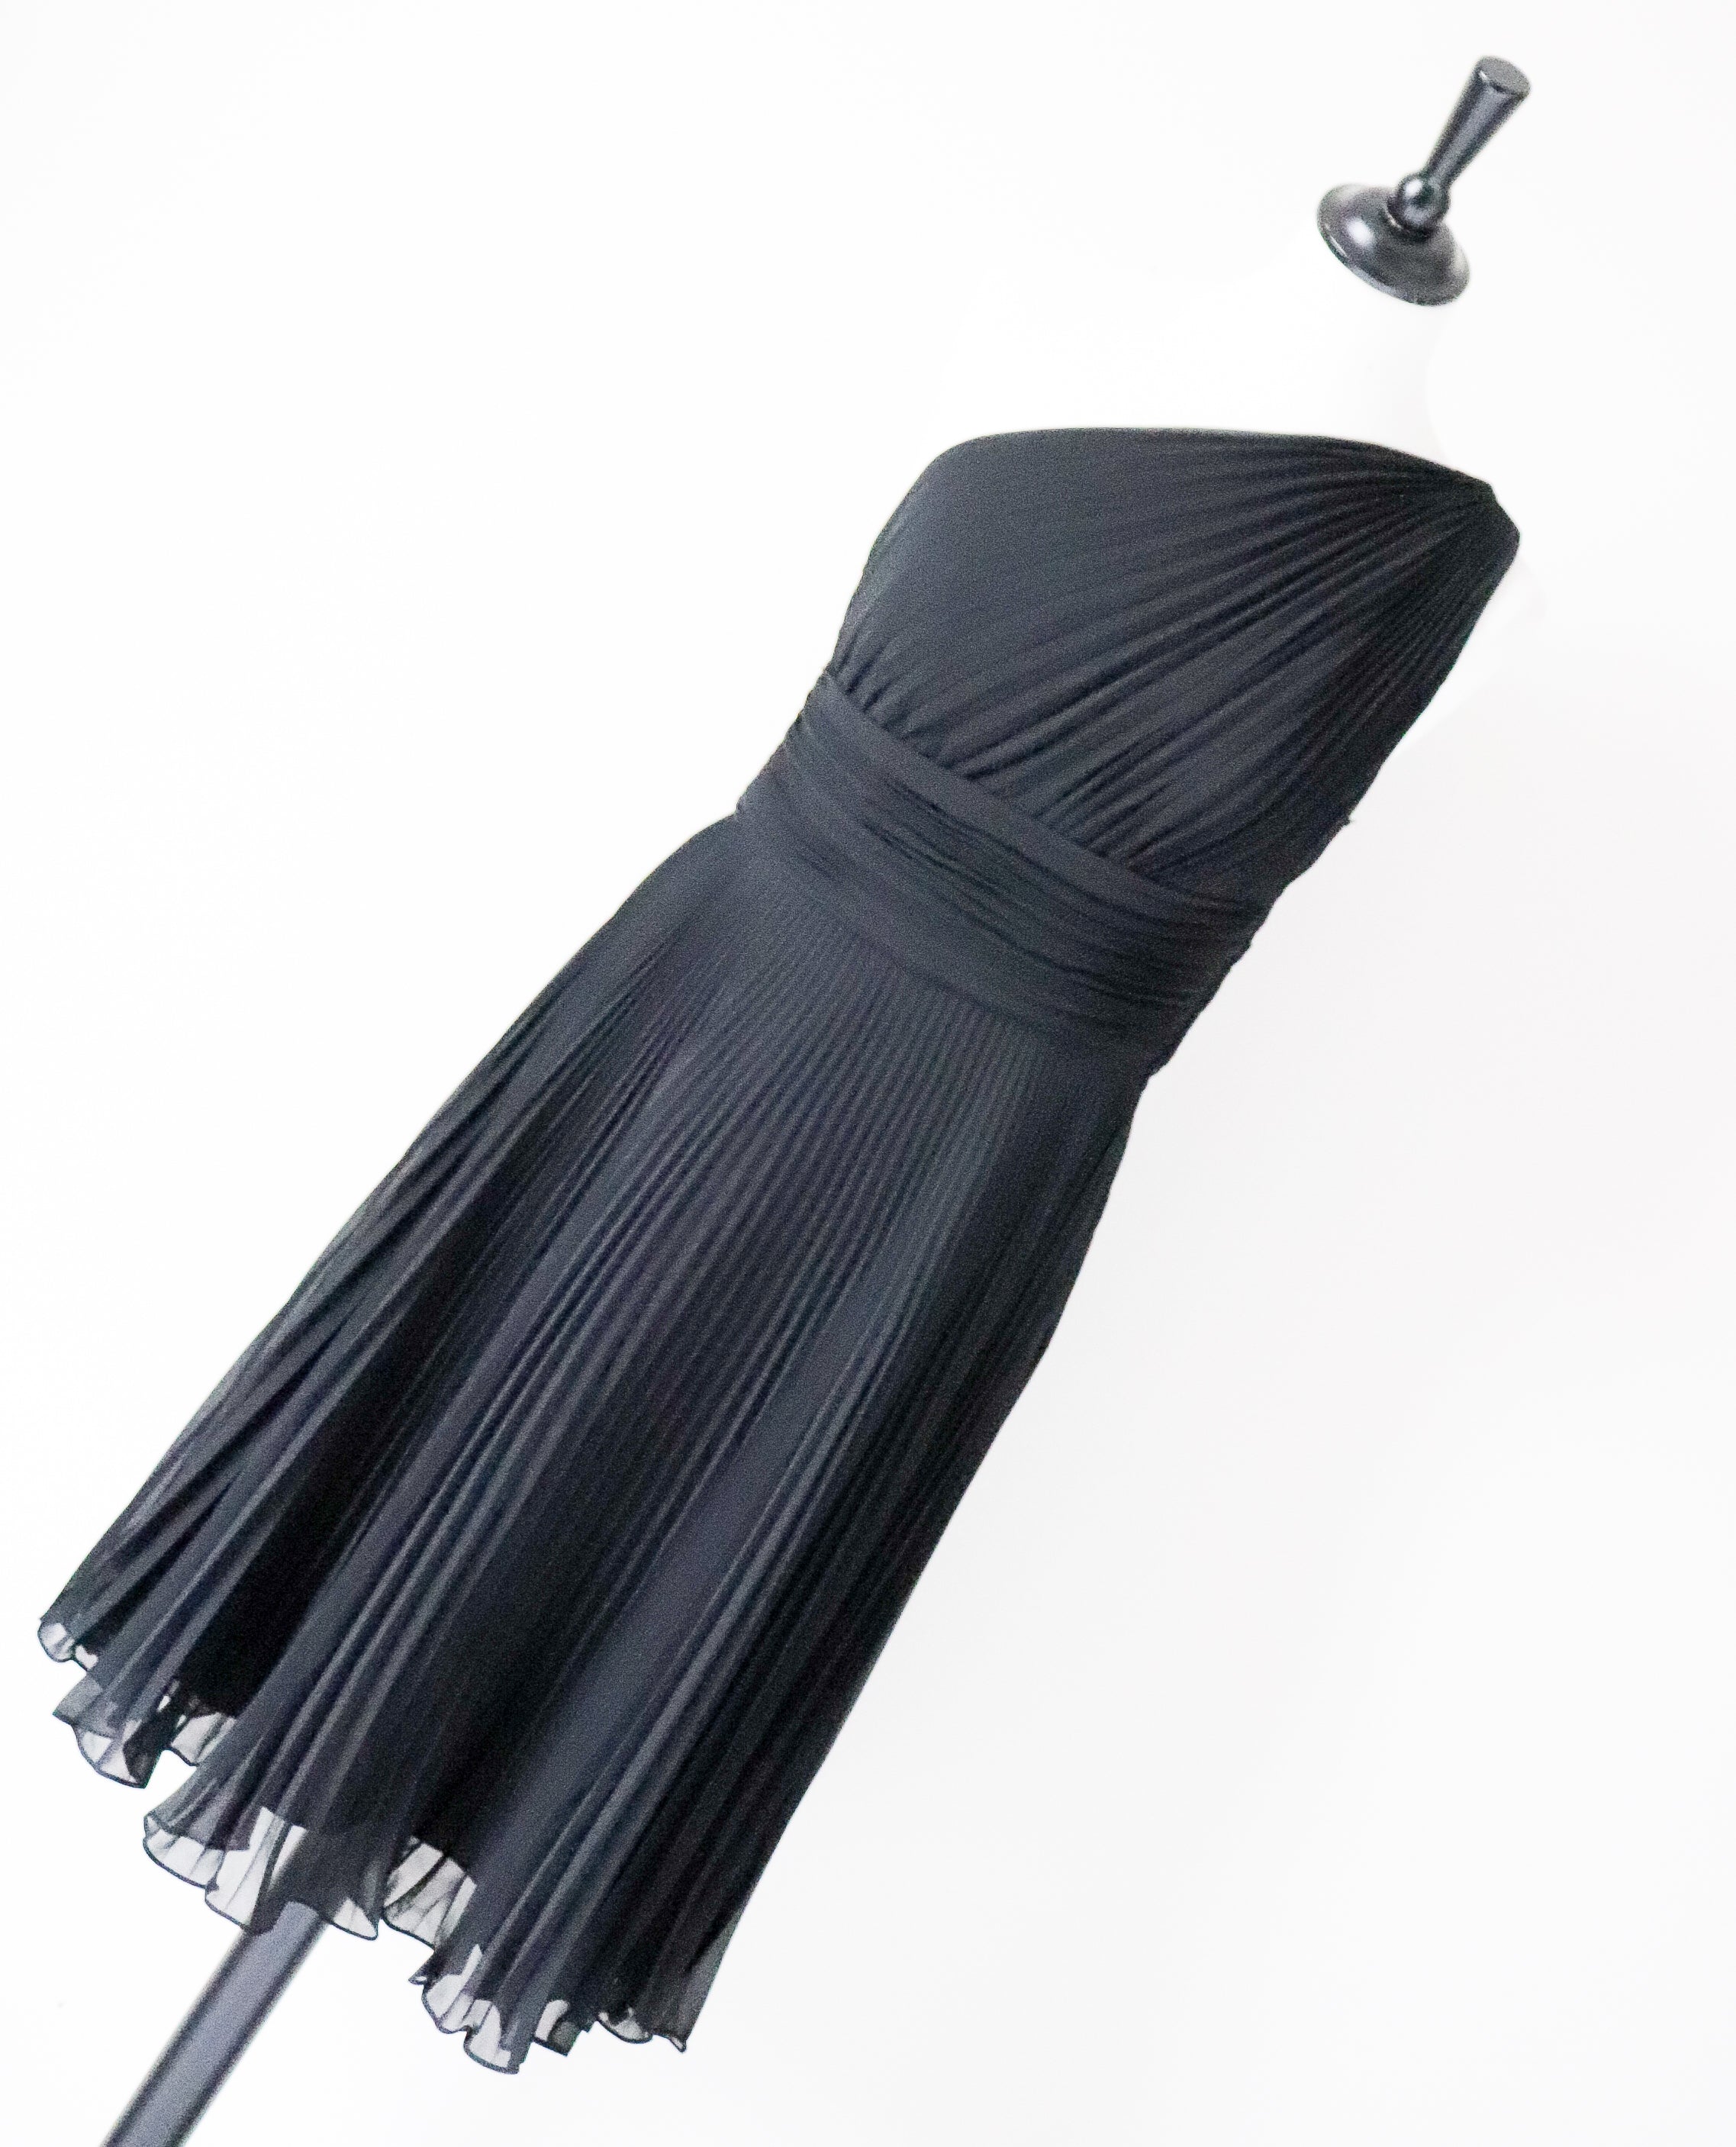 One Shoulder Black Dress - Party LBD - Maggie London Petites  - XXS / UK 6 /8